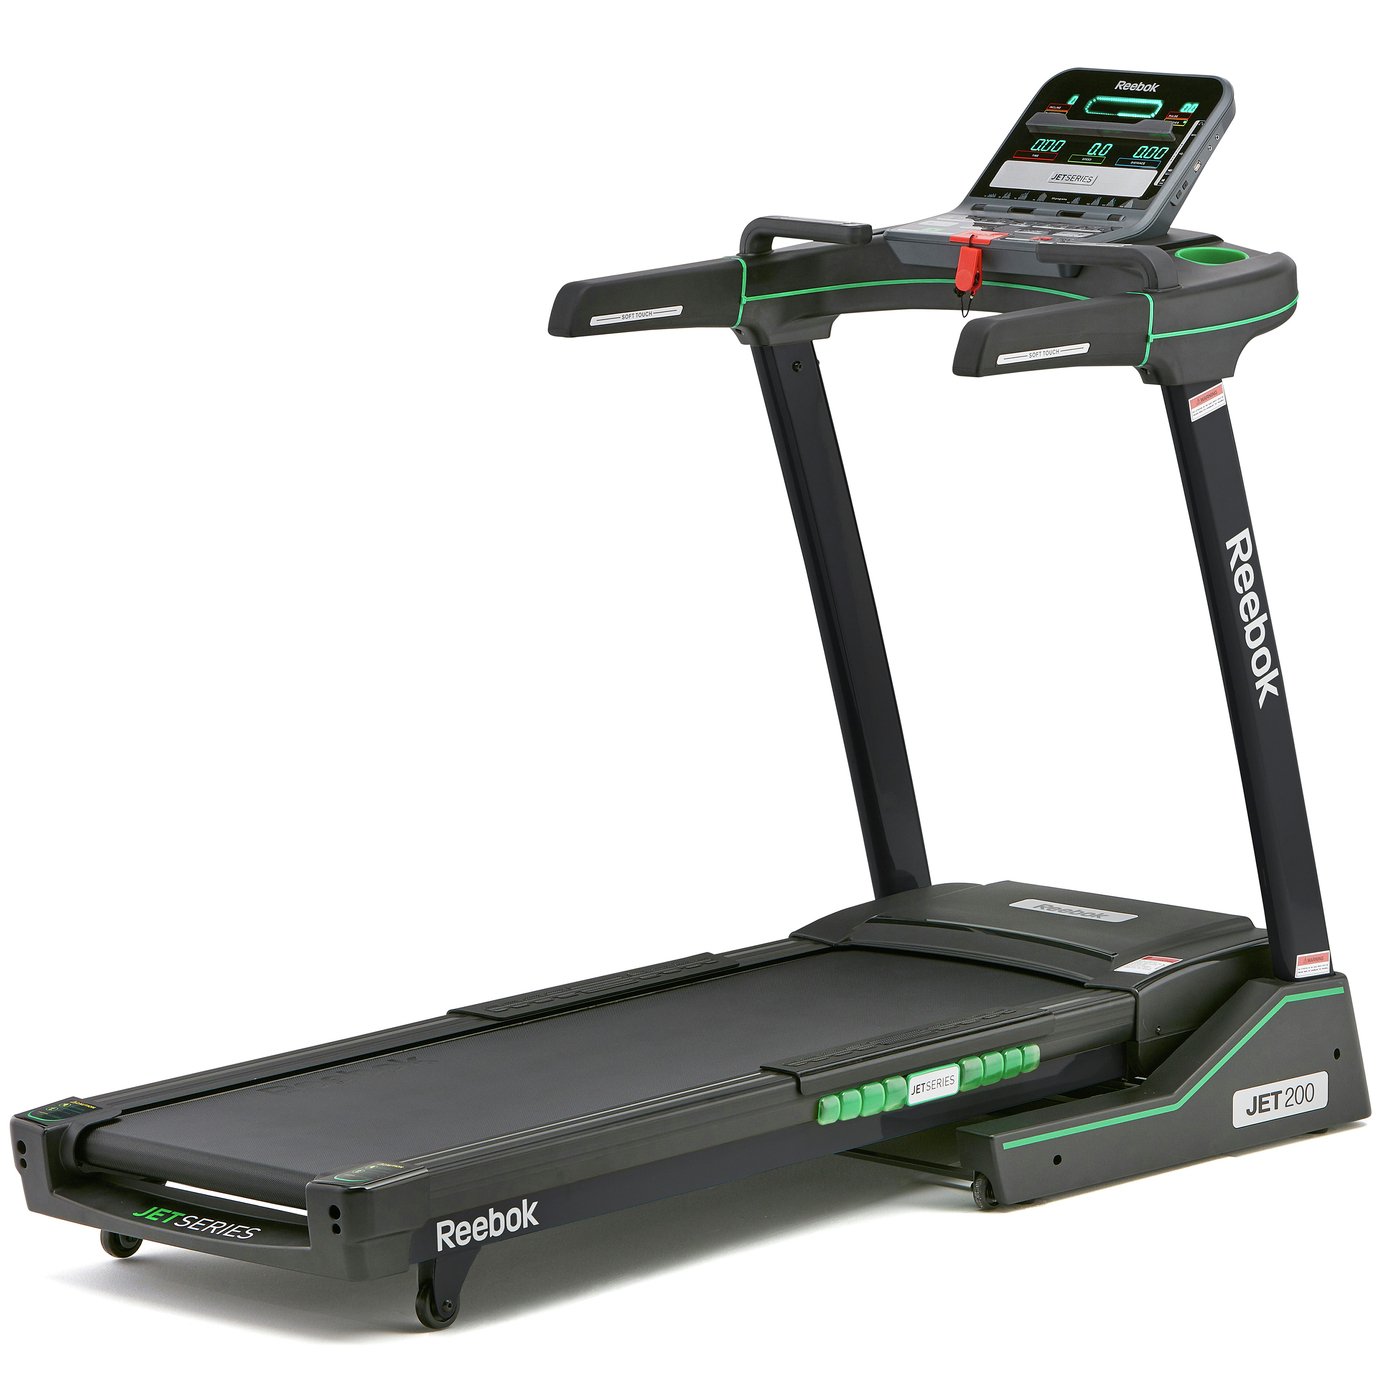 Buy Reebok Jet 200 Treadmill 